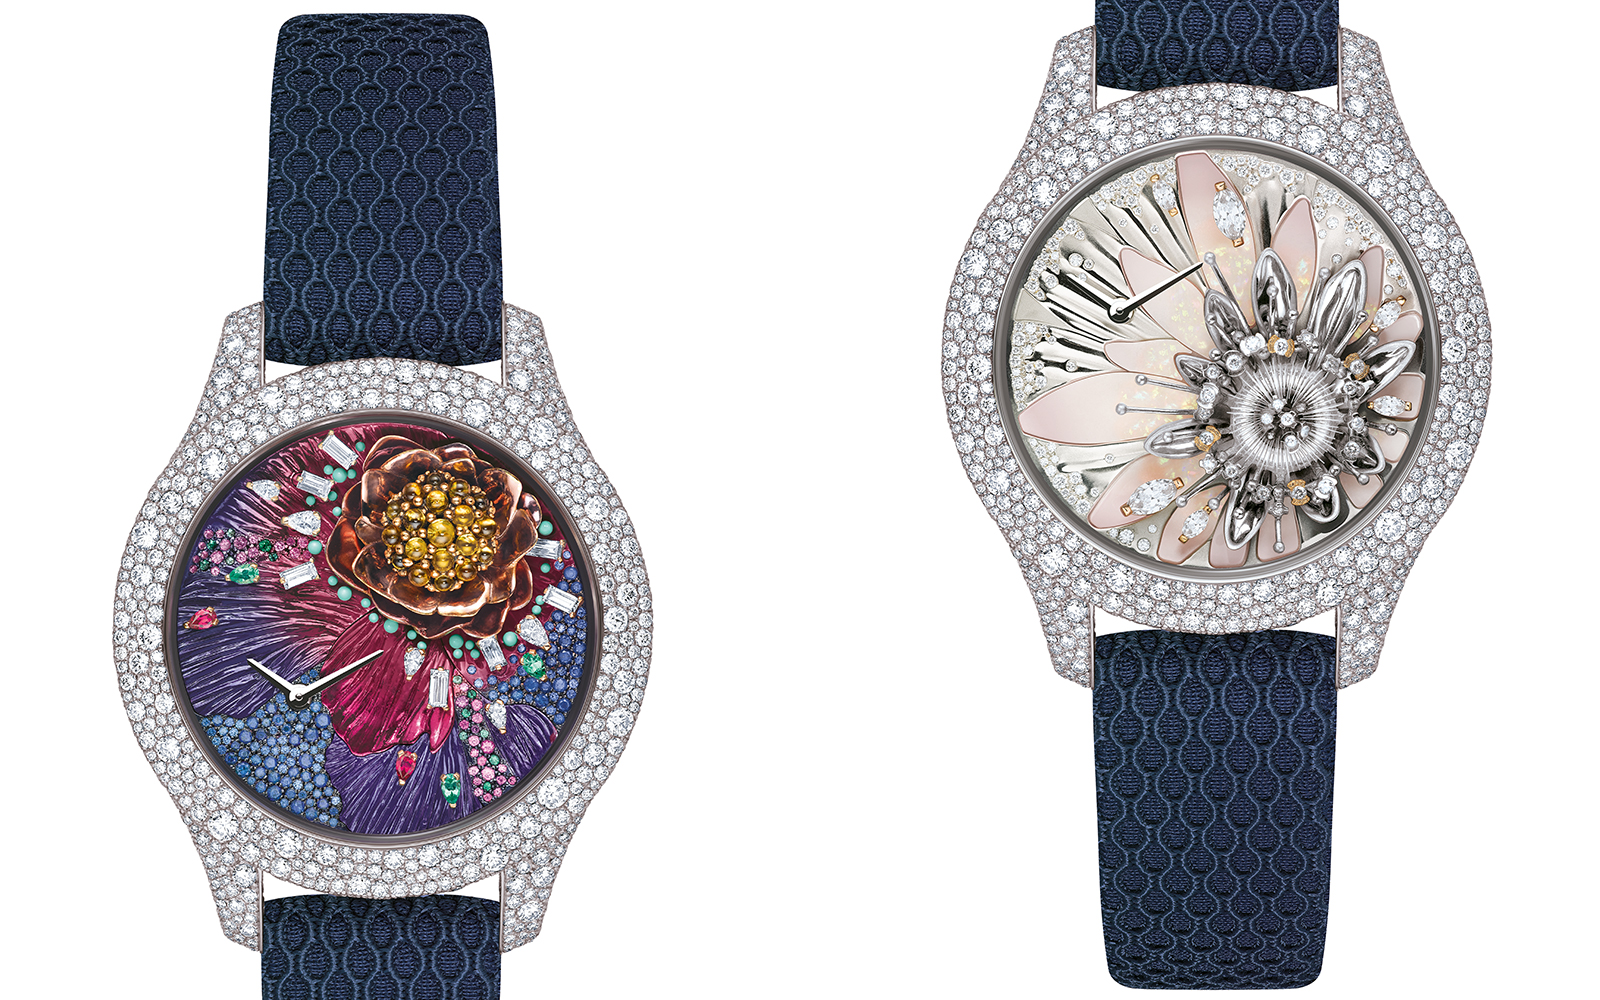 Dior Grand Soir Botanic watches